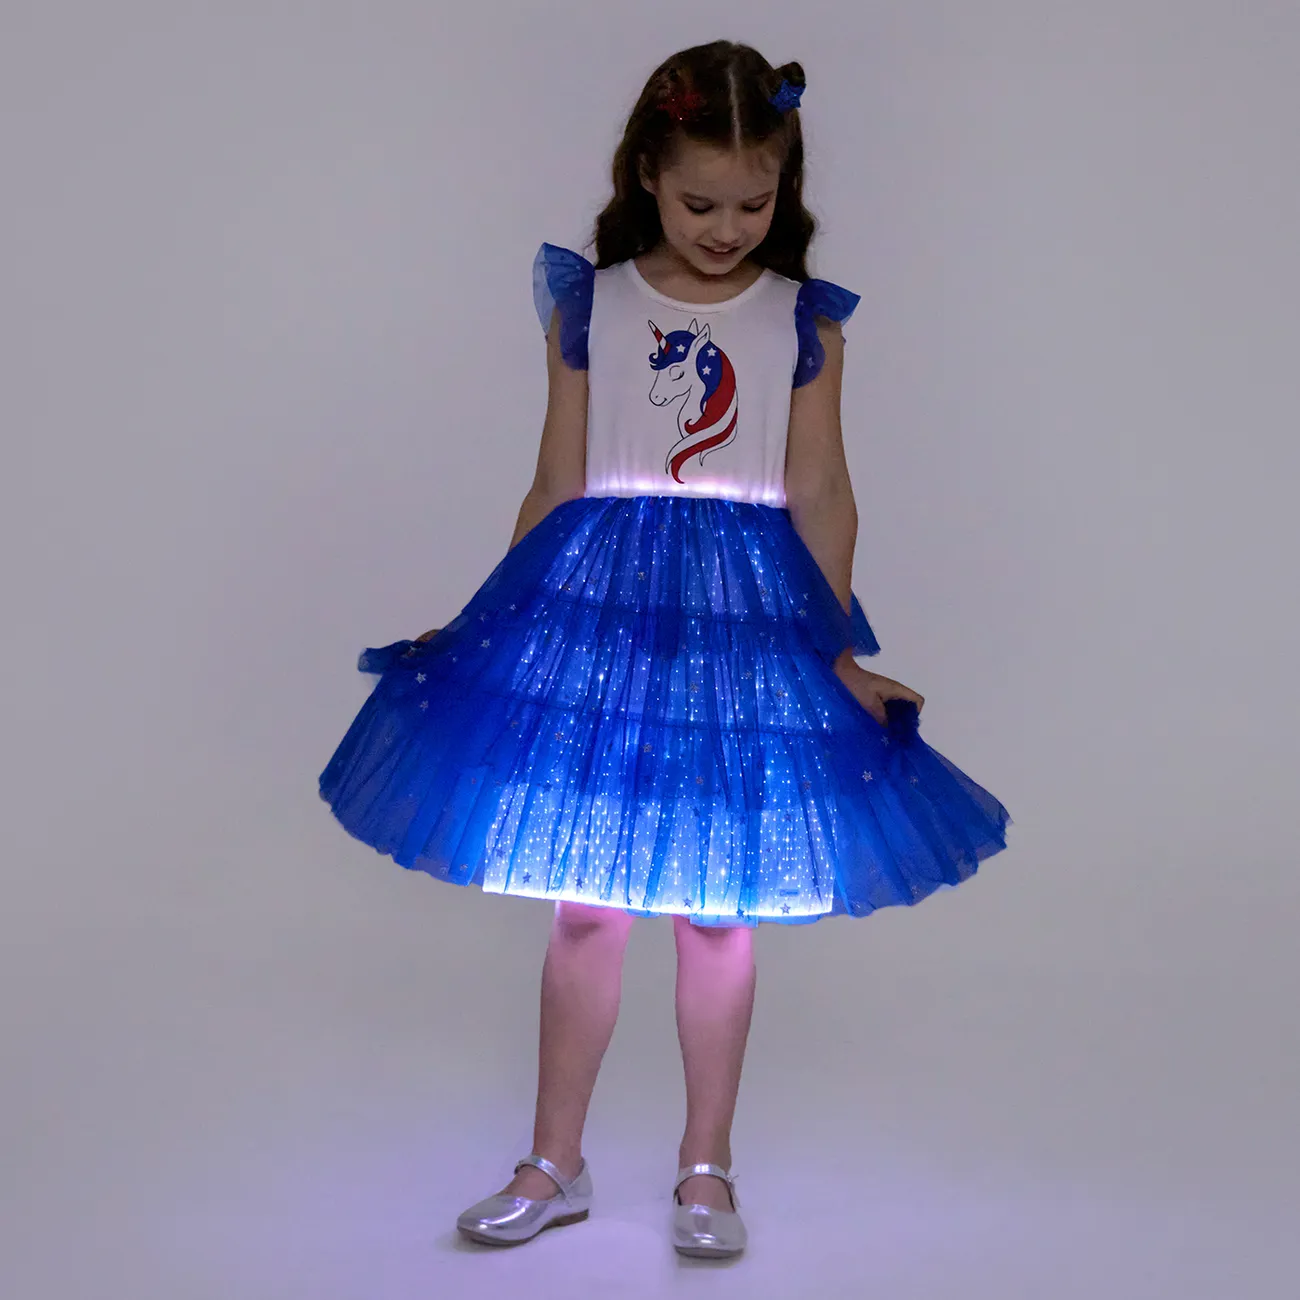 Go-Glow Illuminating Unicorn Dress with Light Up Blue Skirt Including Controller (Battery Inside) Dark Blue/white big image 1